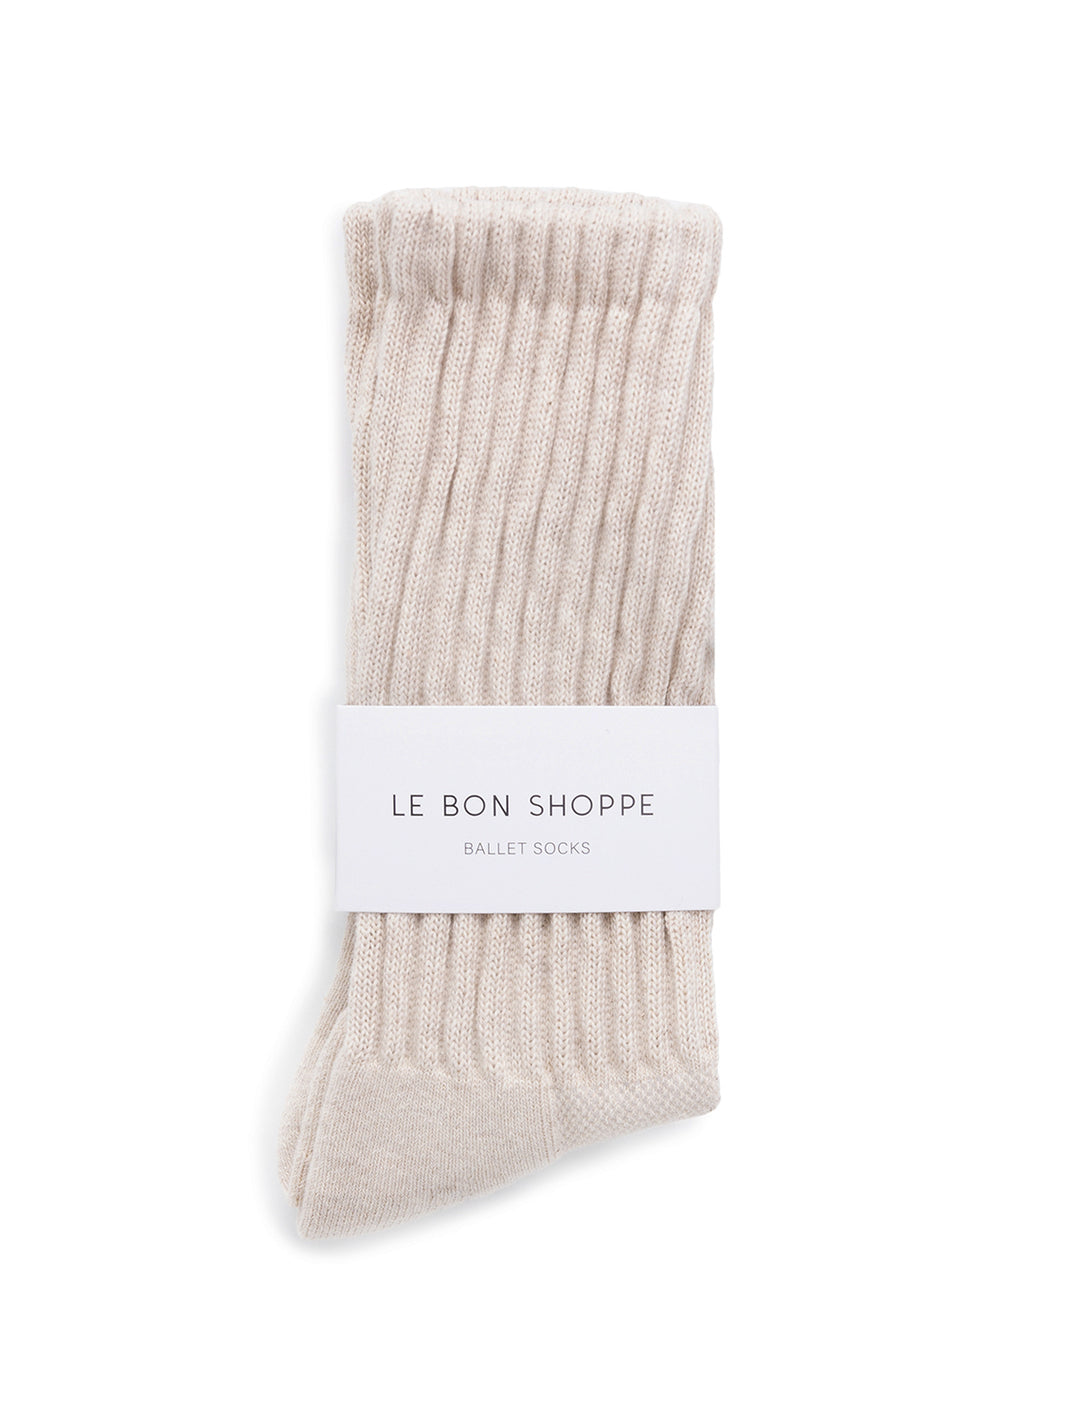 Front view of Le Bon Shoppe's ballet socks in oatmeal.